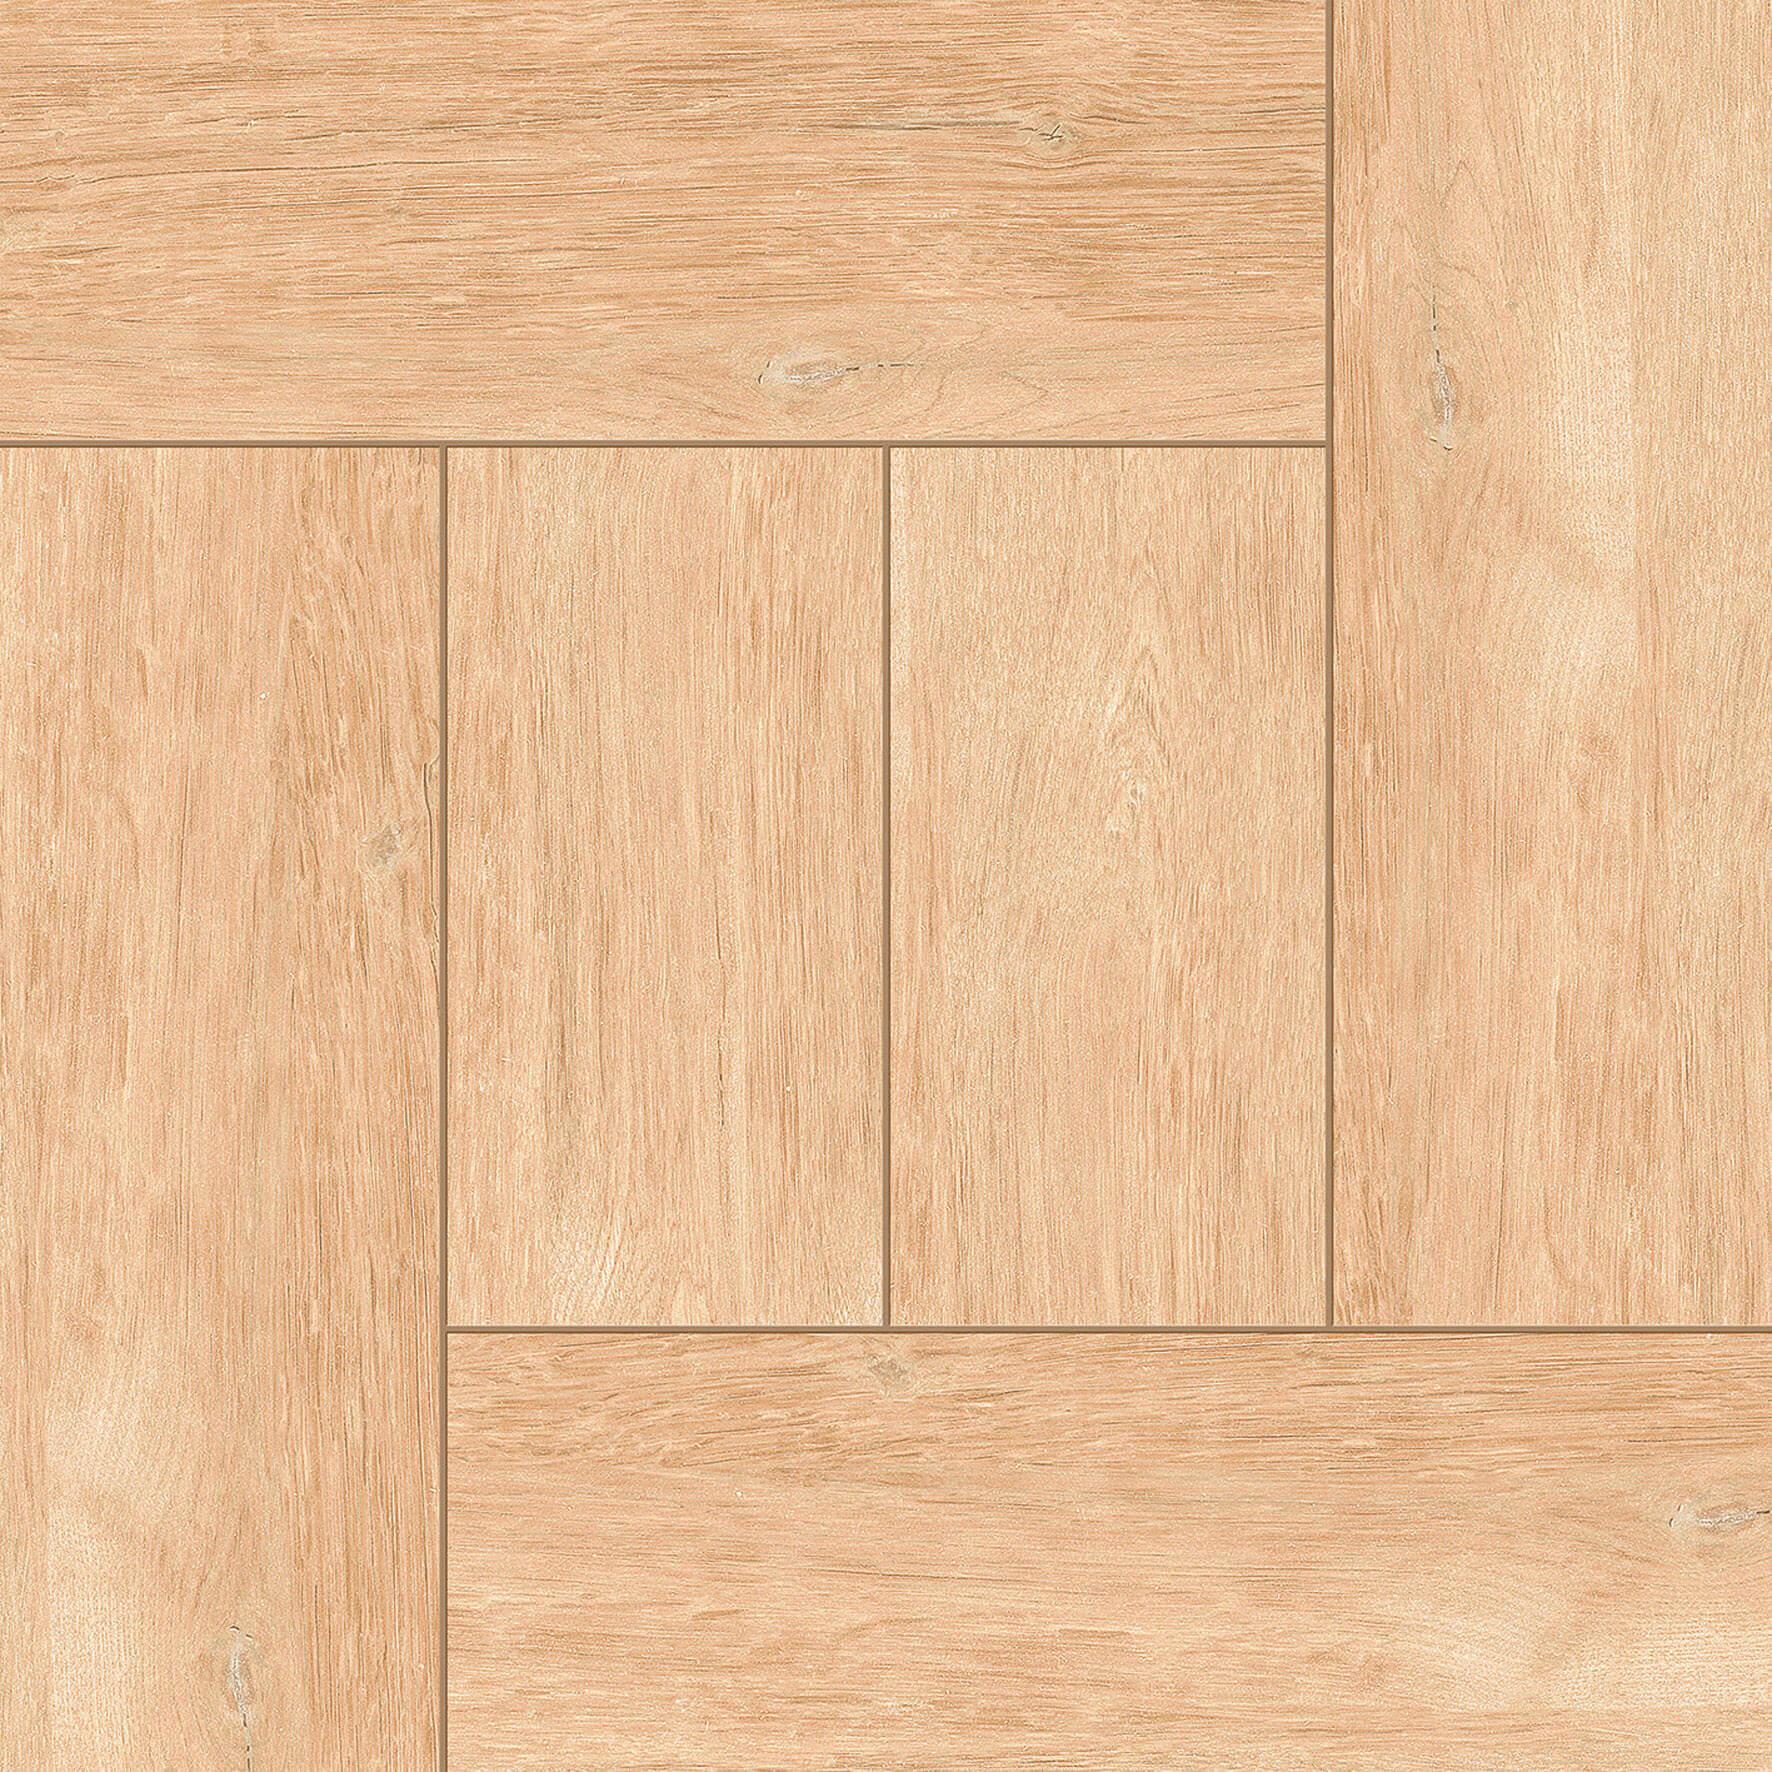 2x2 Tiles for Living Room Tiles, Bedroom Tiles, Balcony Tiles, Accent Tiles, Terrace Tiles, Hospital Tiles, Automotive Tiles, High Traffic Tiles, Bar/Restaurant, Commercial/Office, Outdoor/Terrace